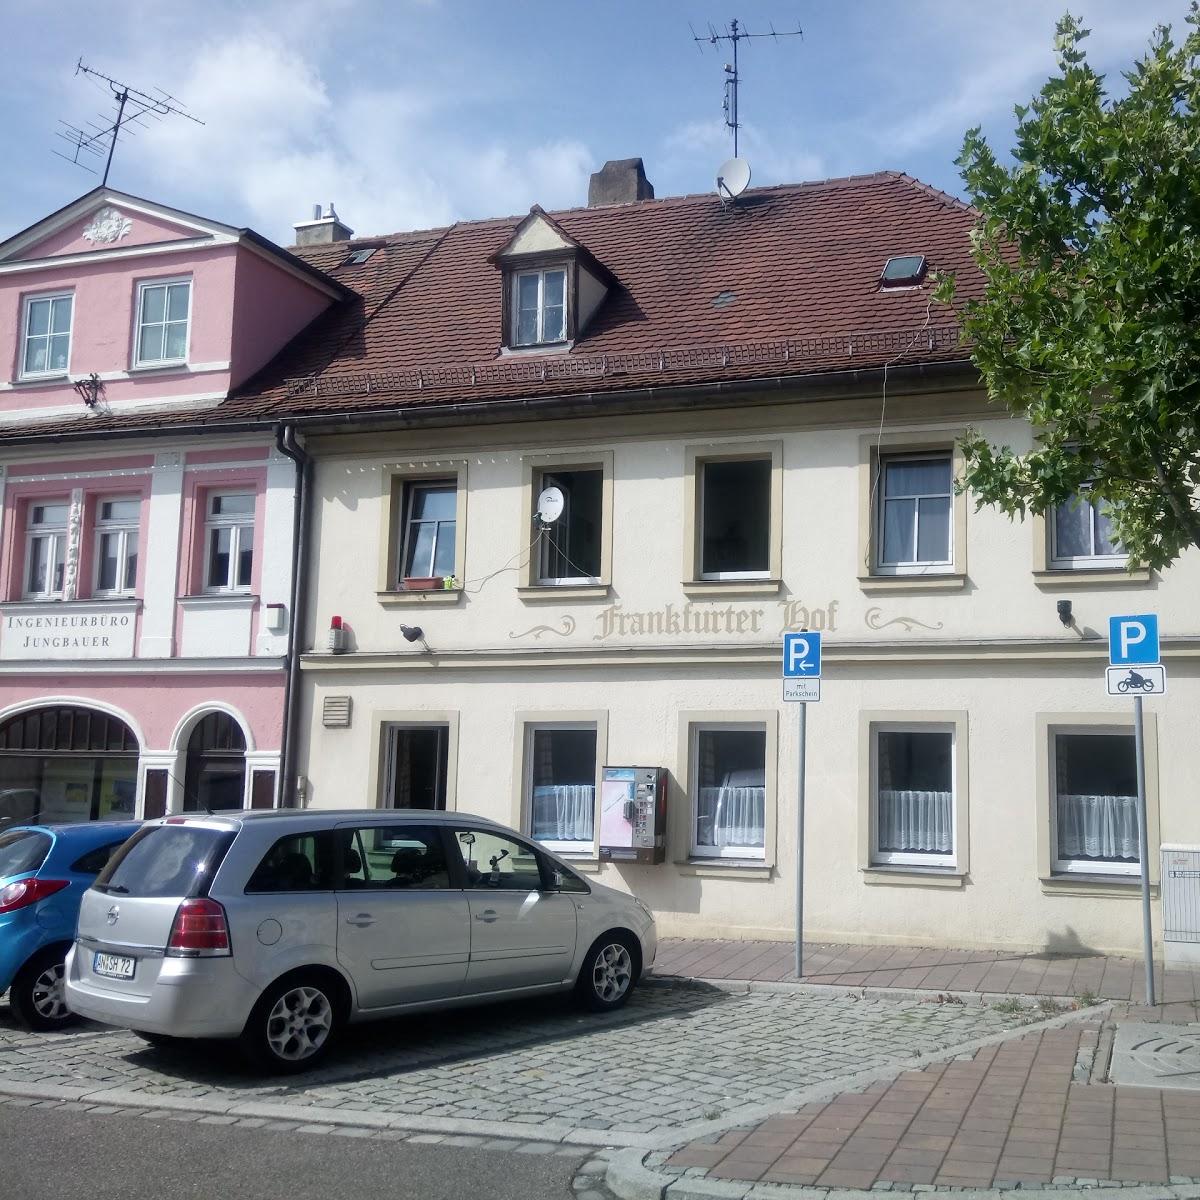 Restaurant "Restaurant Frankfurter Hof" in Ansbach